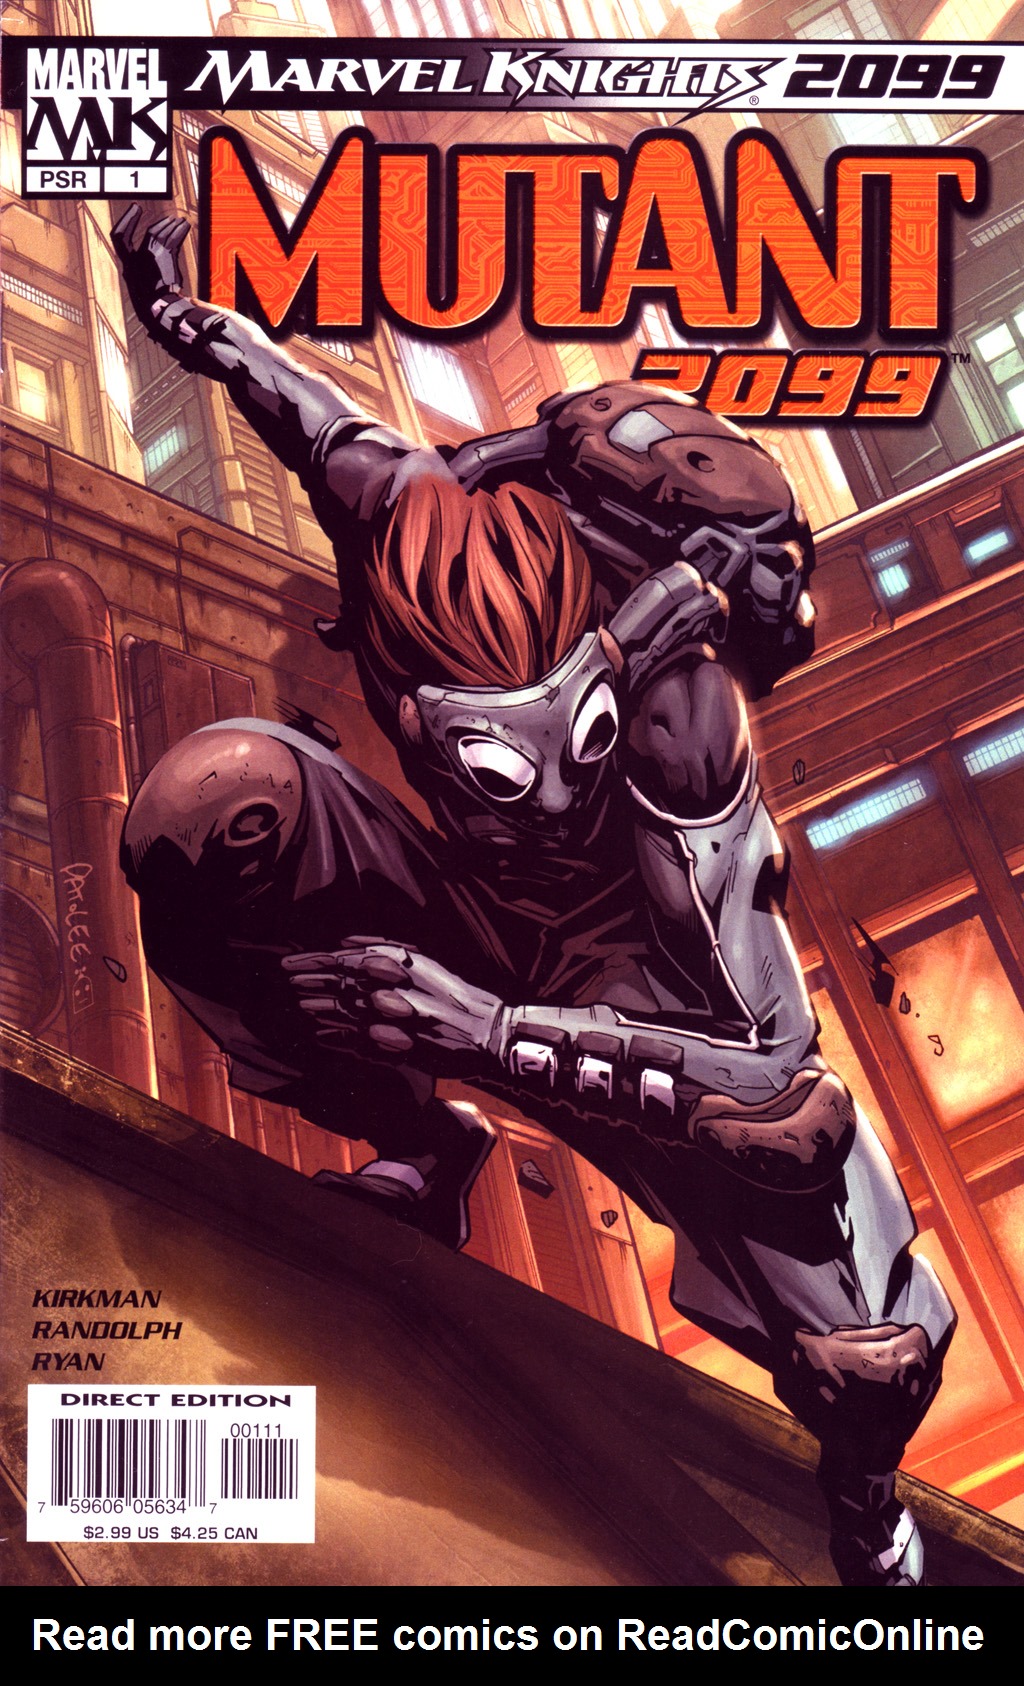 Read online Mutant 2099 comic -  Issue # Full - 1